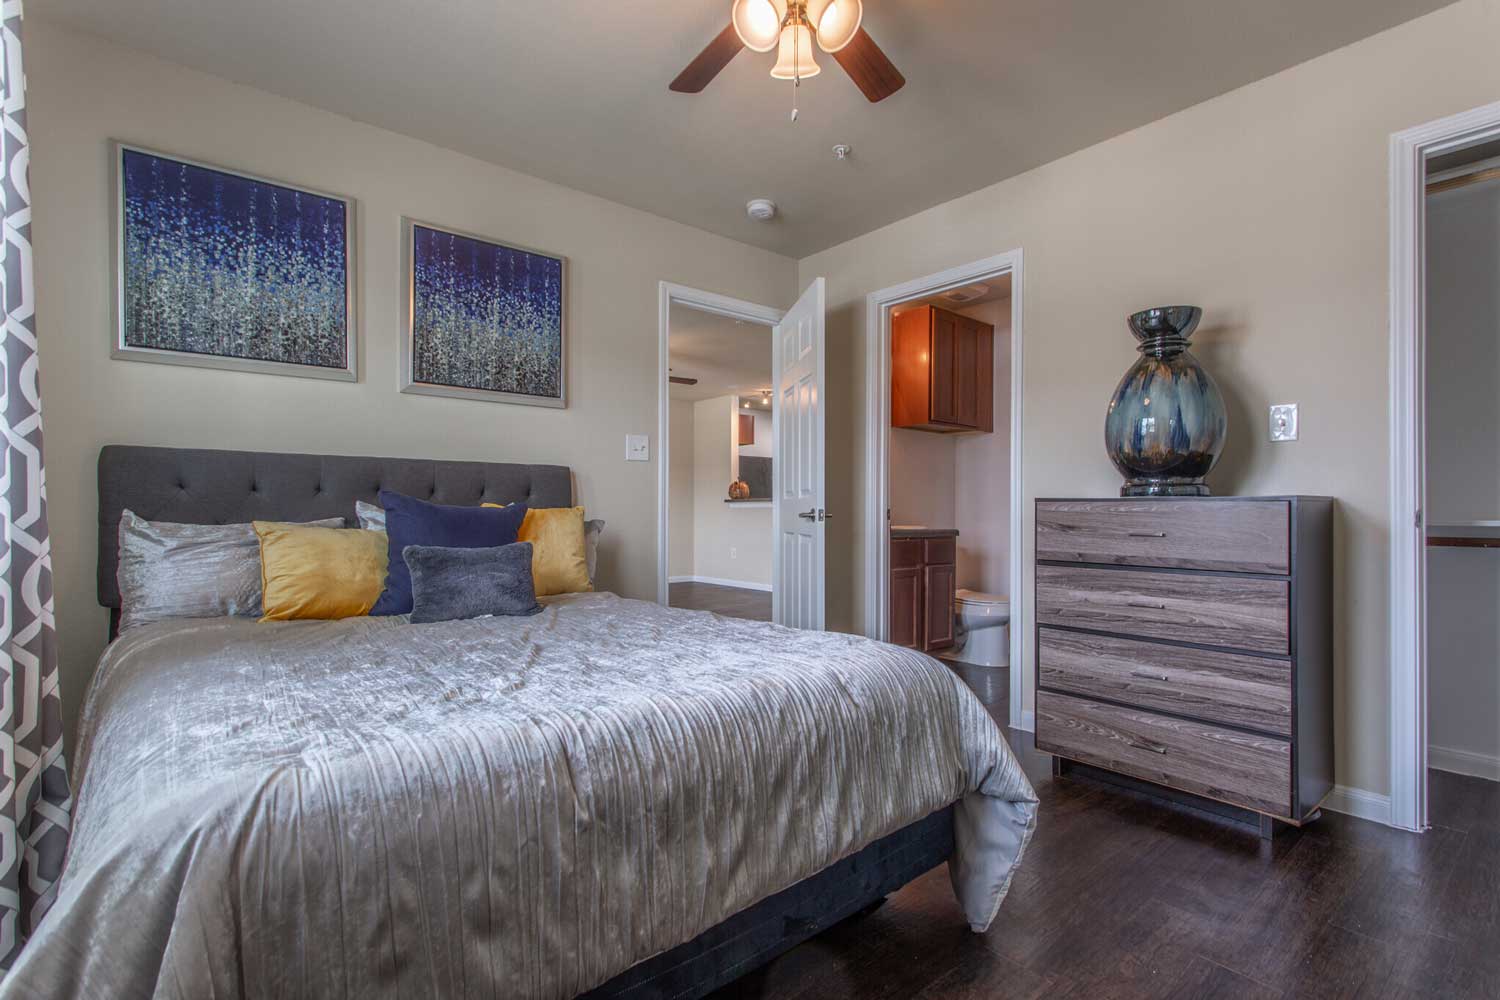 Interior of Bedroom at Esperanza at Wilson Road Apartments in Humble, Texas